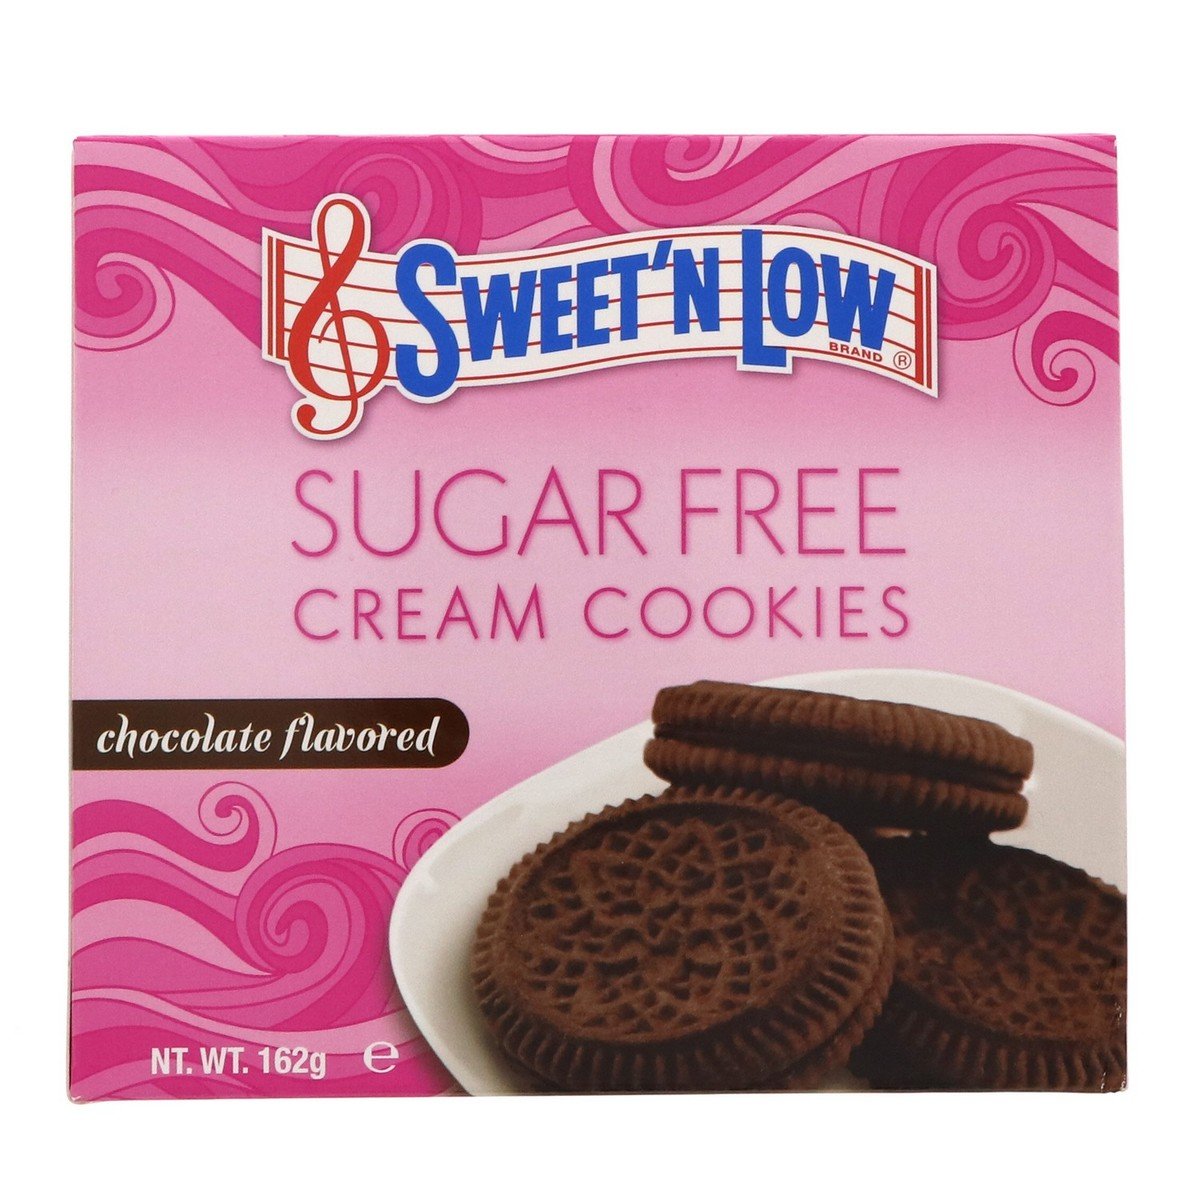 Sweet N Low Sugar Free Cream Cookies With Chocolate Flavored 162 g